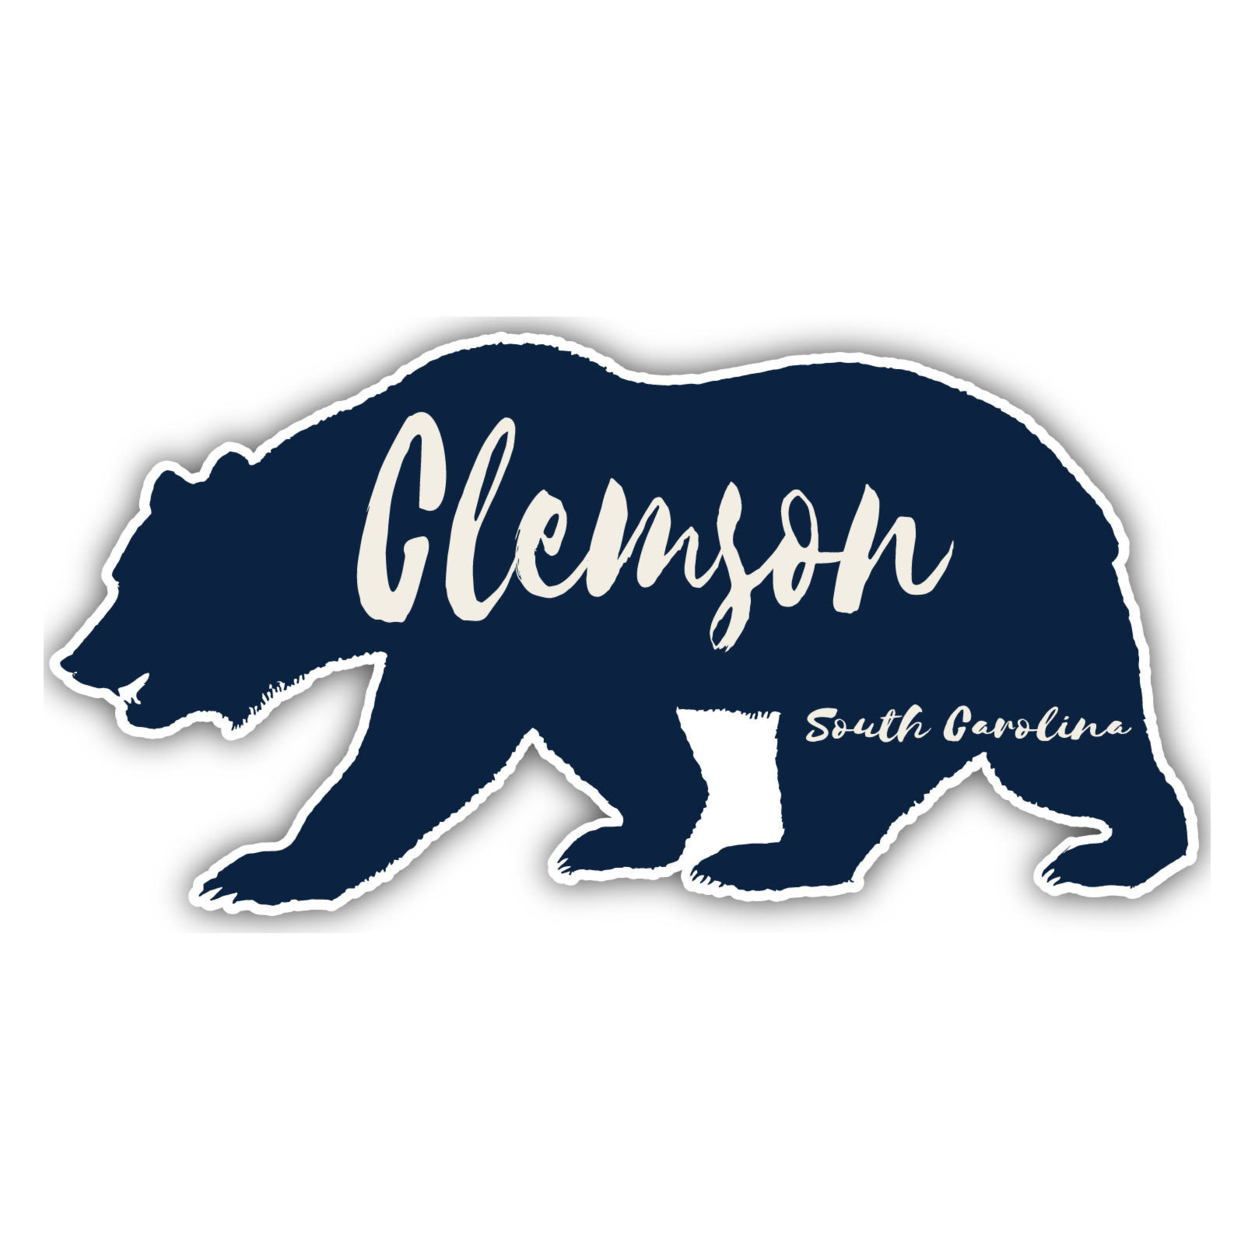 Clemson South Carolina Souvenir Decorative Stickers (Choose Theme And Size) - Single Unit, 10-Inch, Camp Life